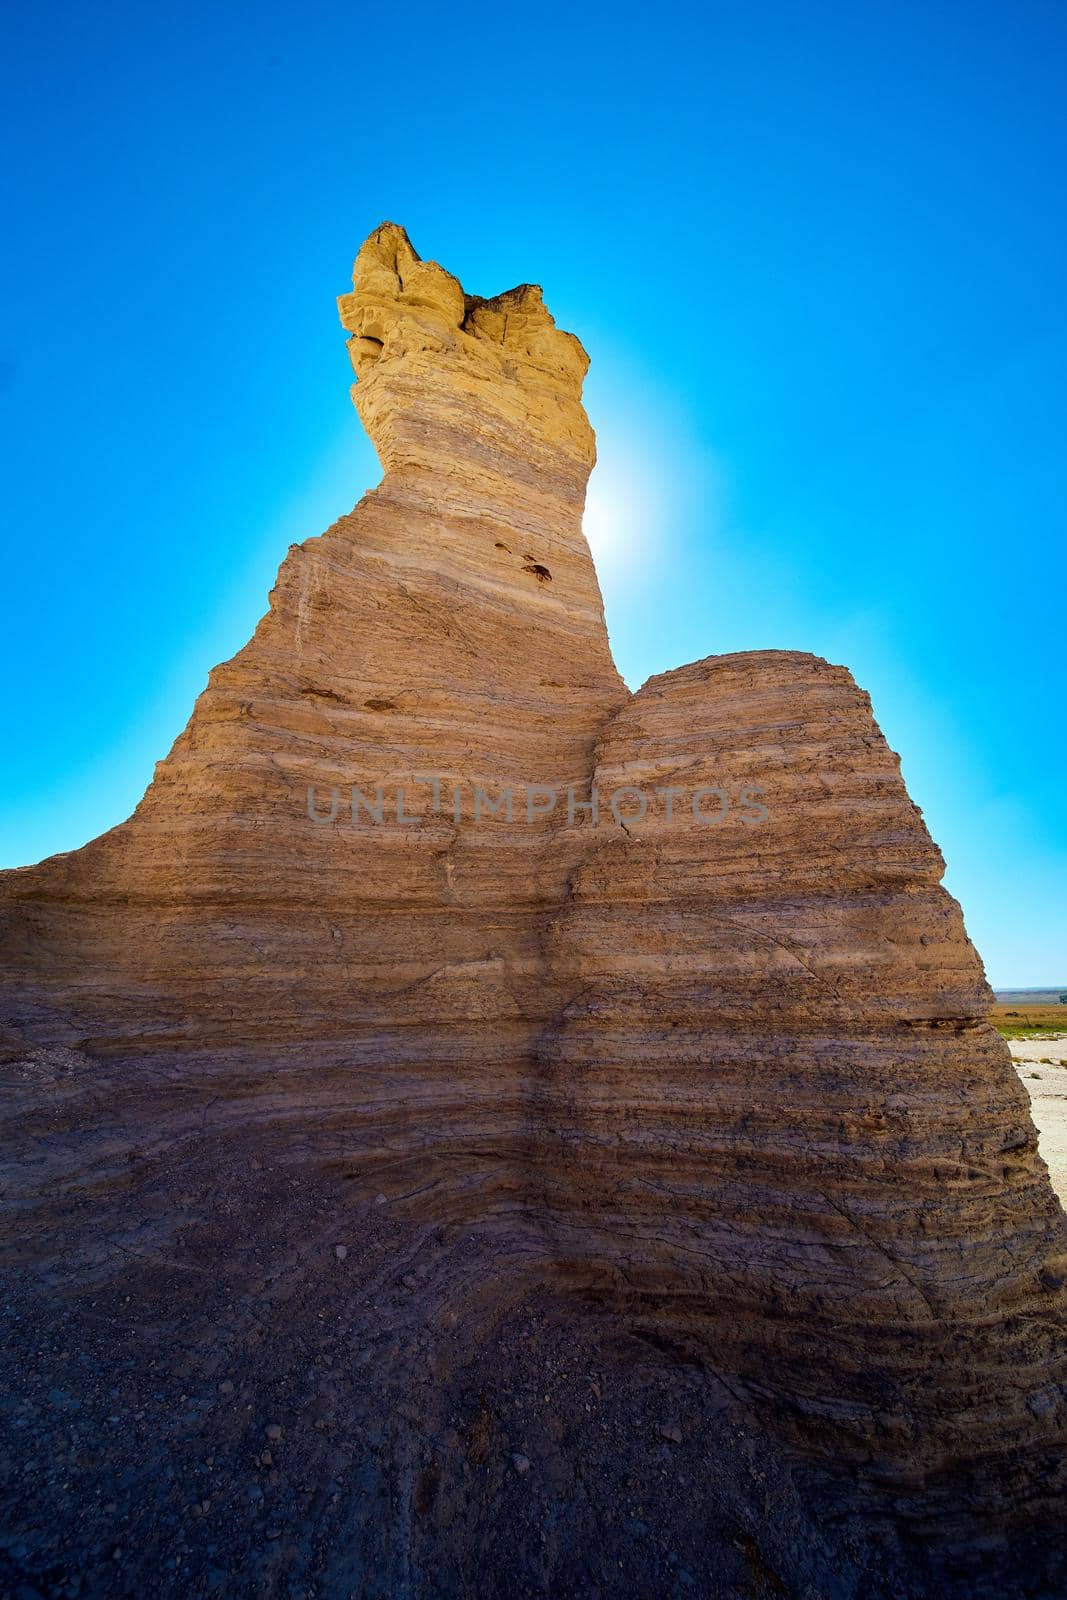 Image of Sun blocked by large pillars of rock in desert